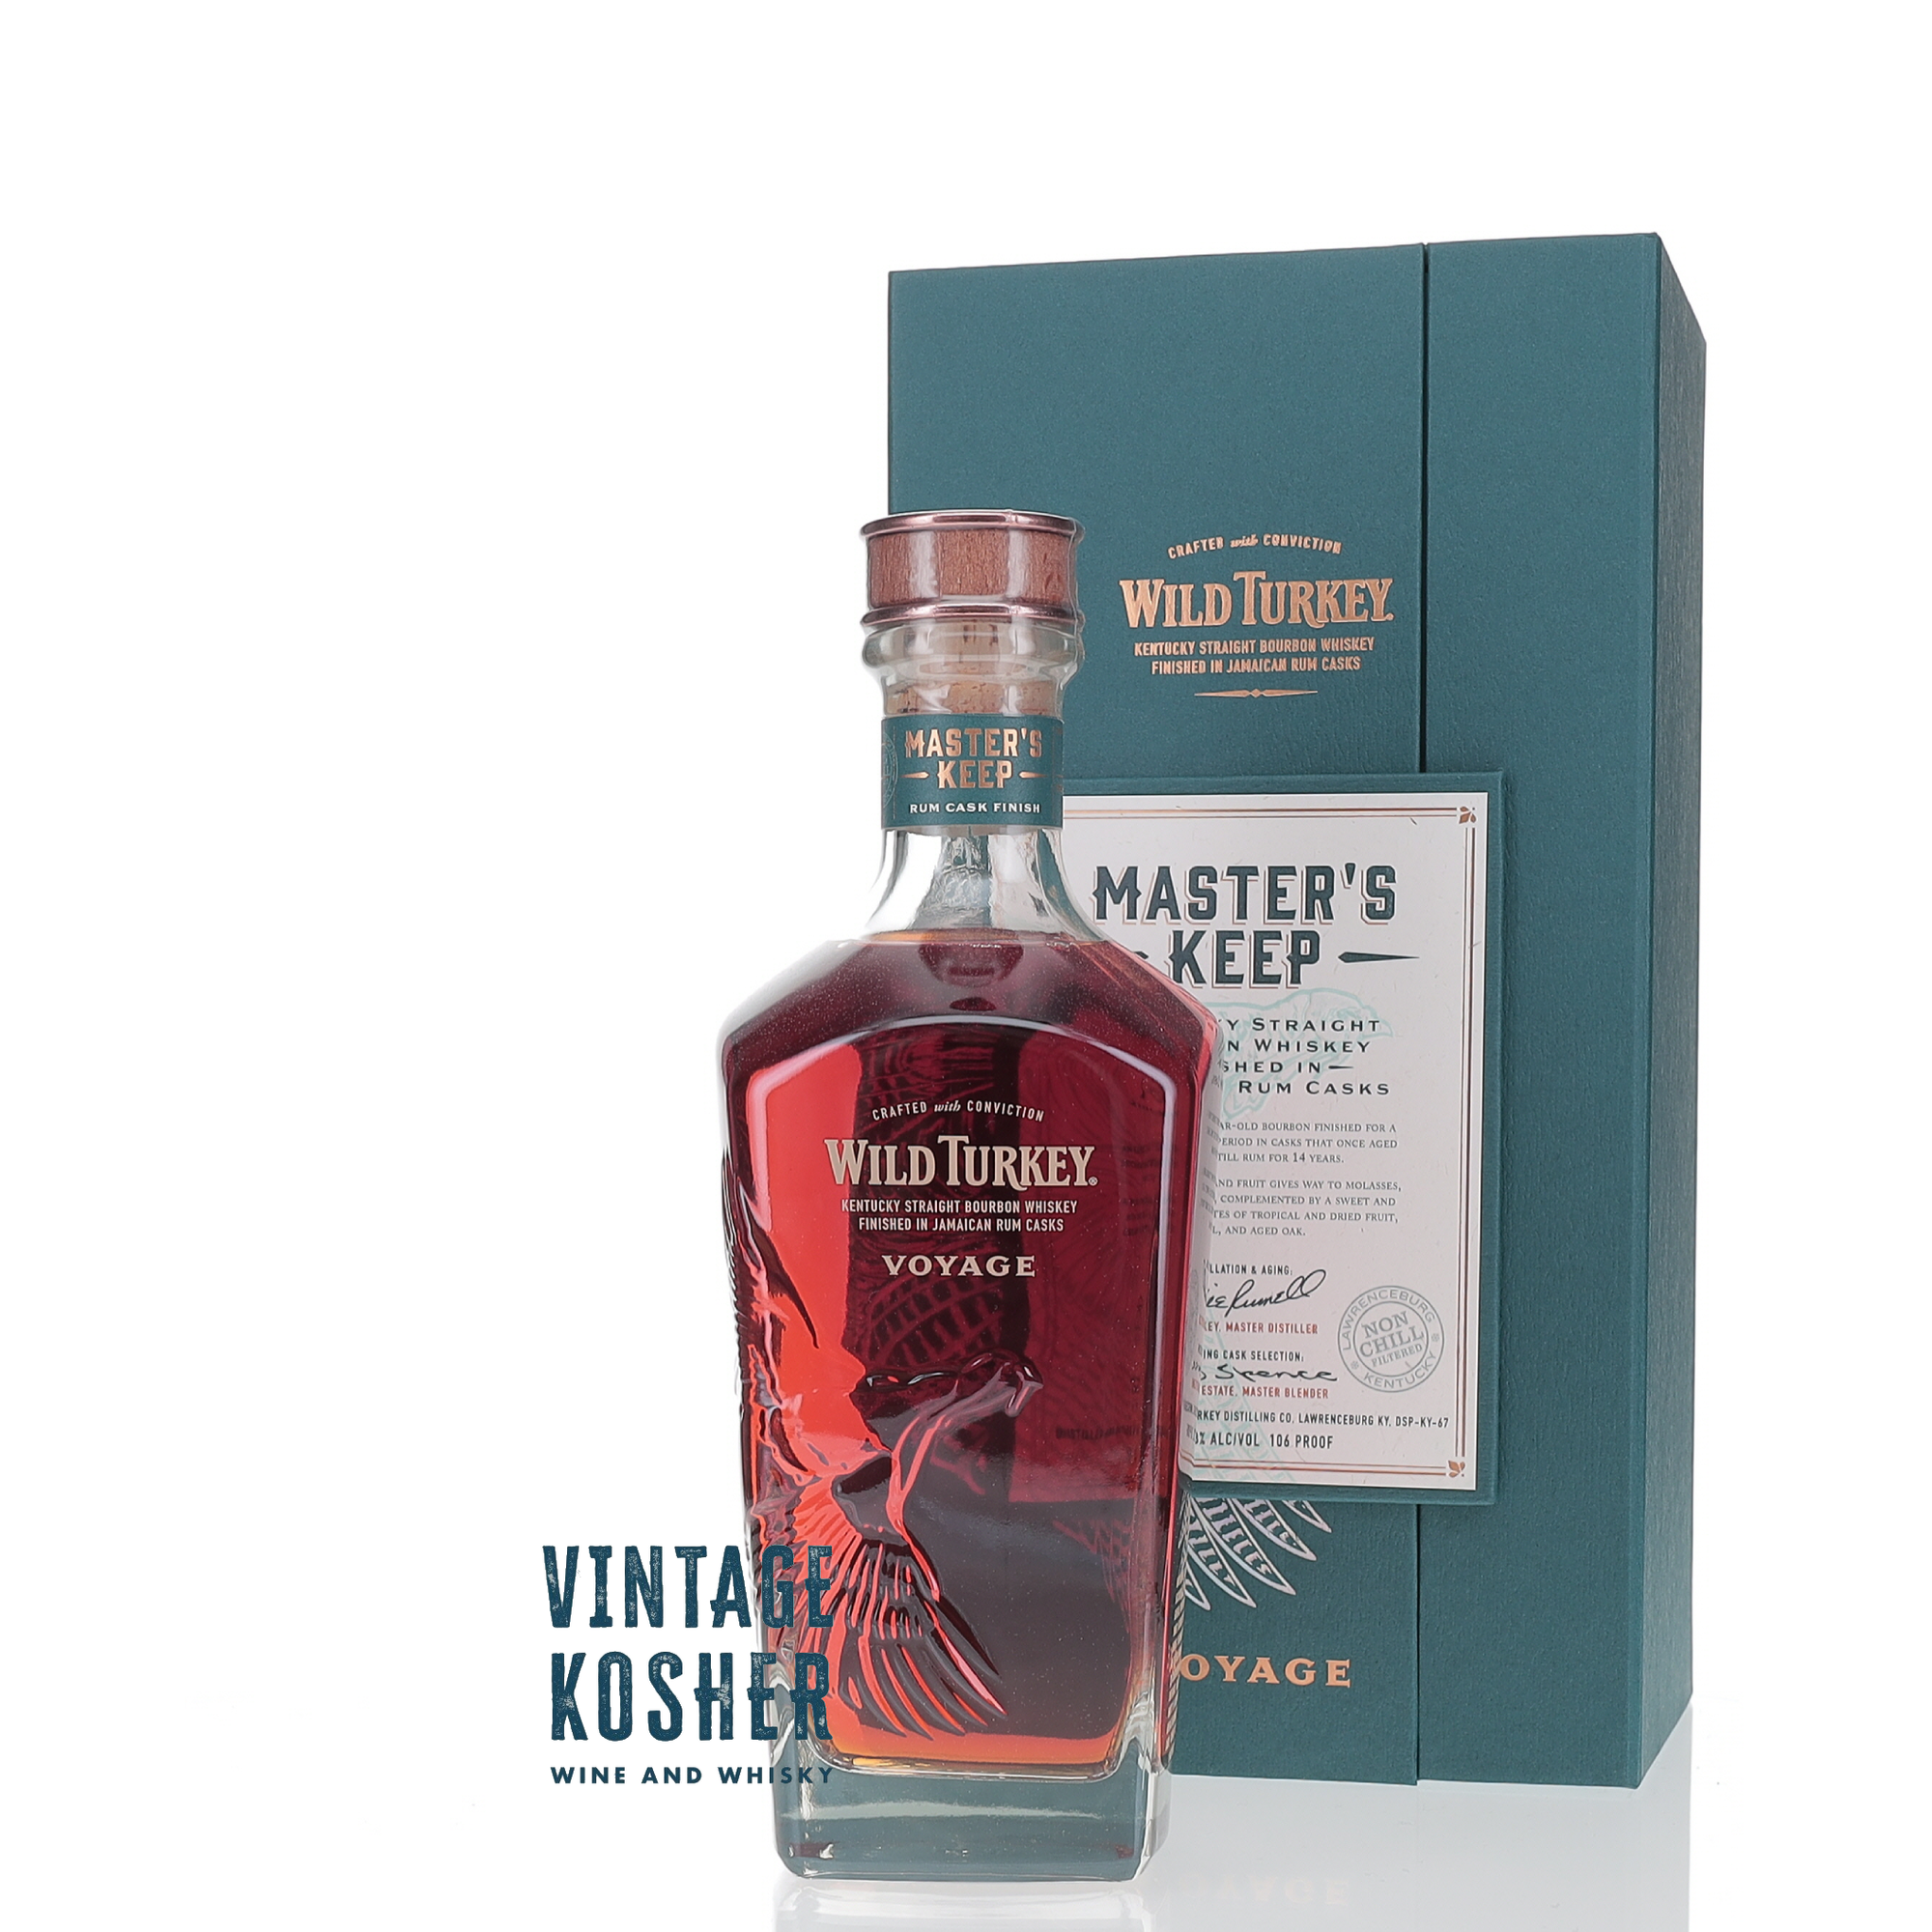 Wild Turkey Rum Cask 'Master Keep' Voyage Kentucky Straight Bourbon Whiskey